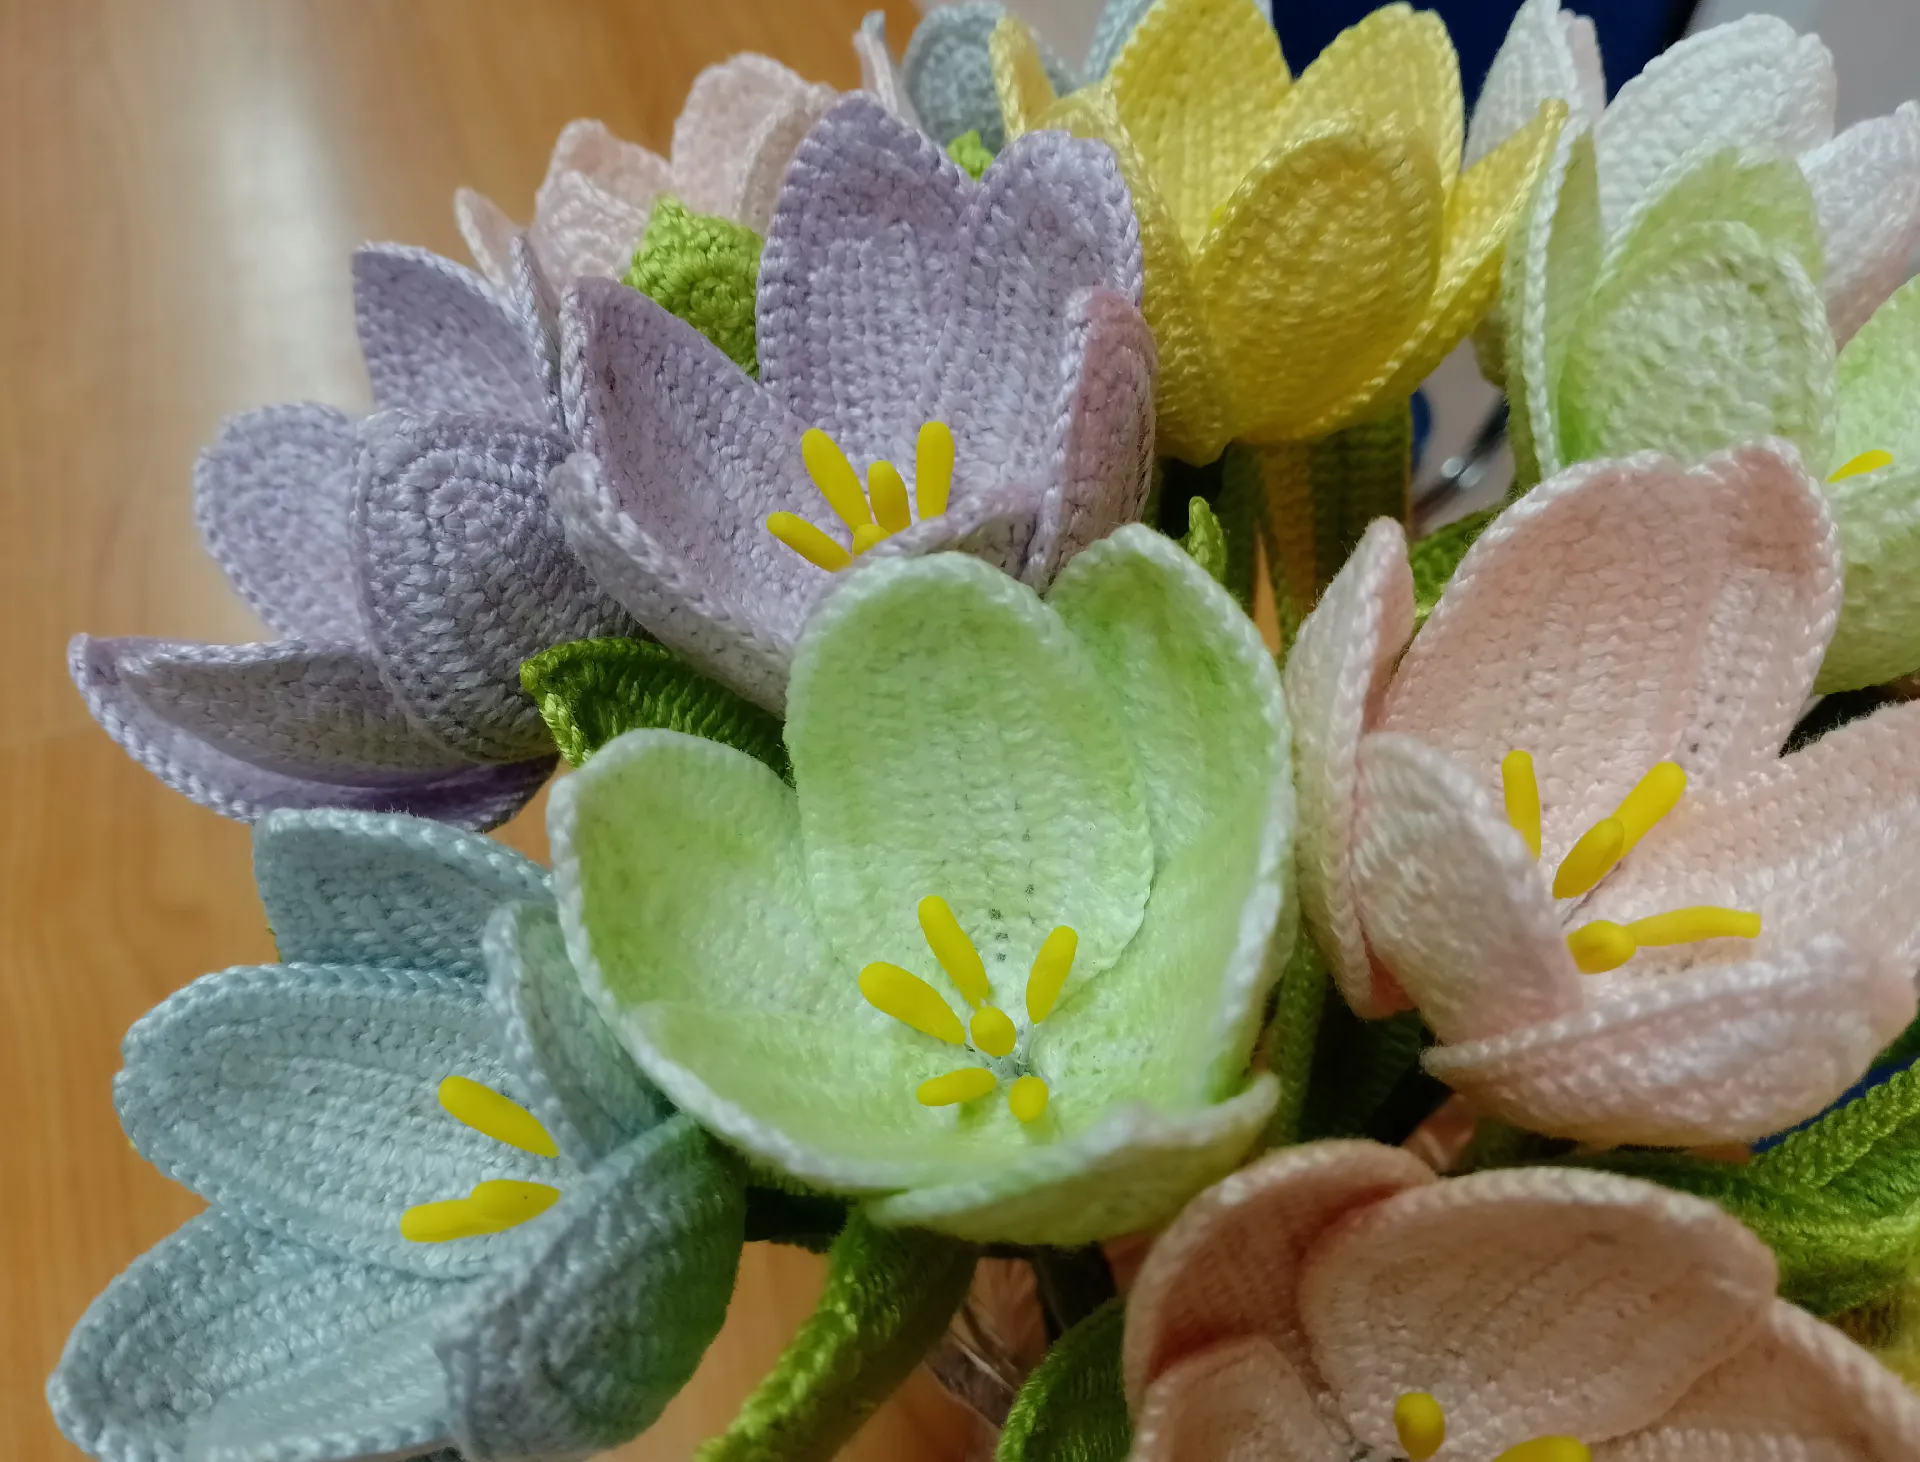 Crochet Tulip Flowers 🌷 - Friendly Tutorial for Beginners